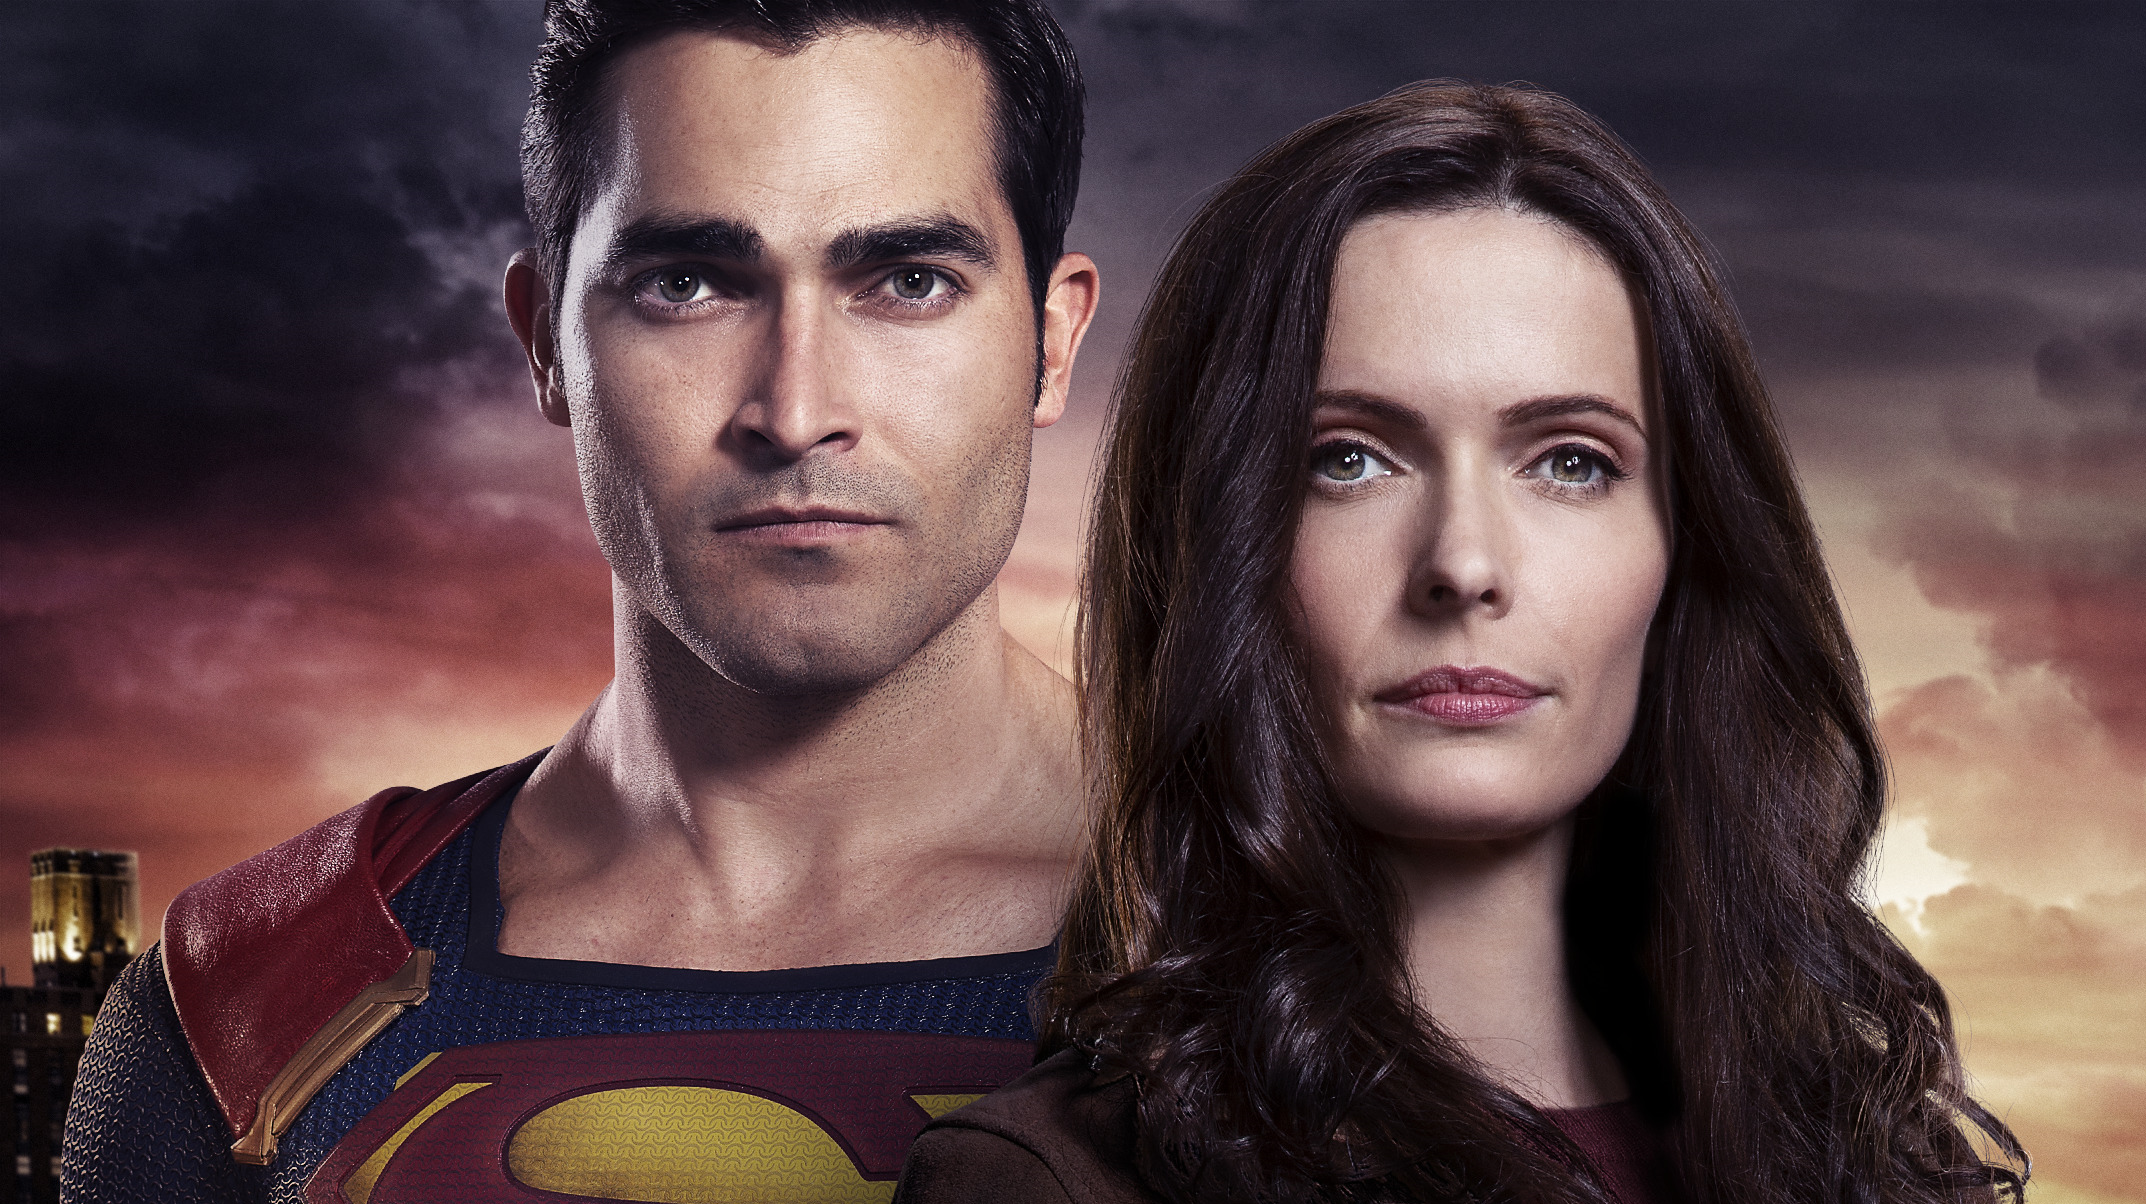 Superman & Lois S1 Ep 1 Review | The Aspiring Kryptonian